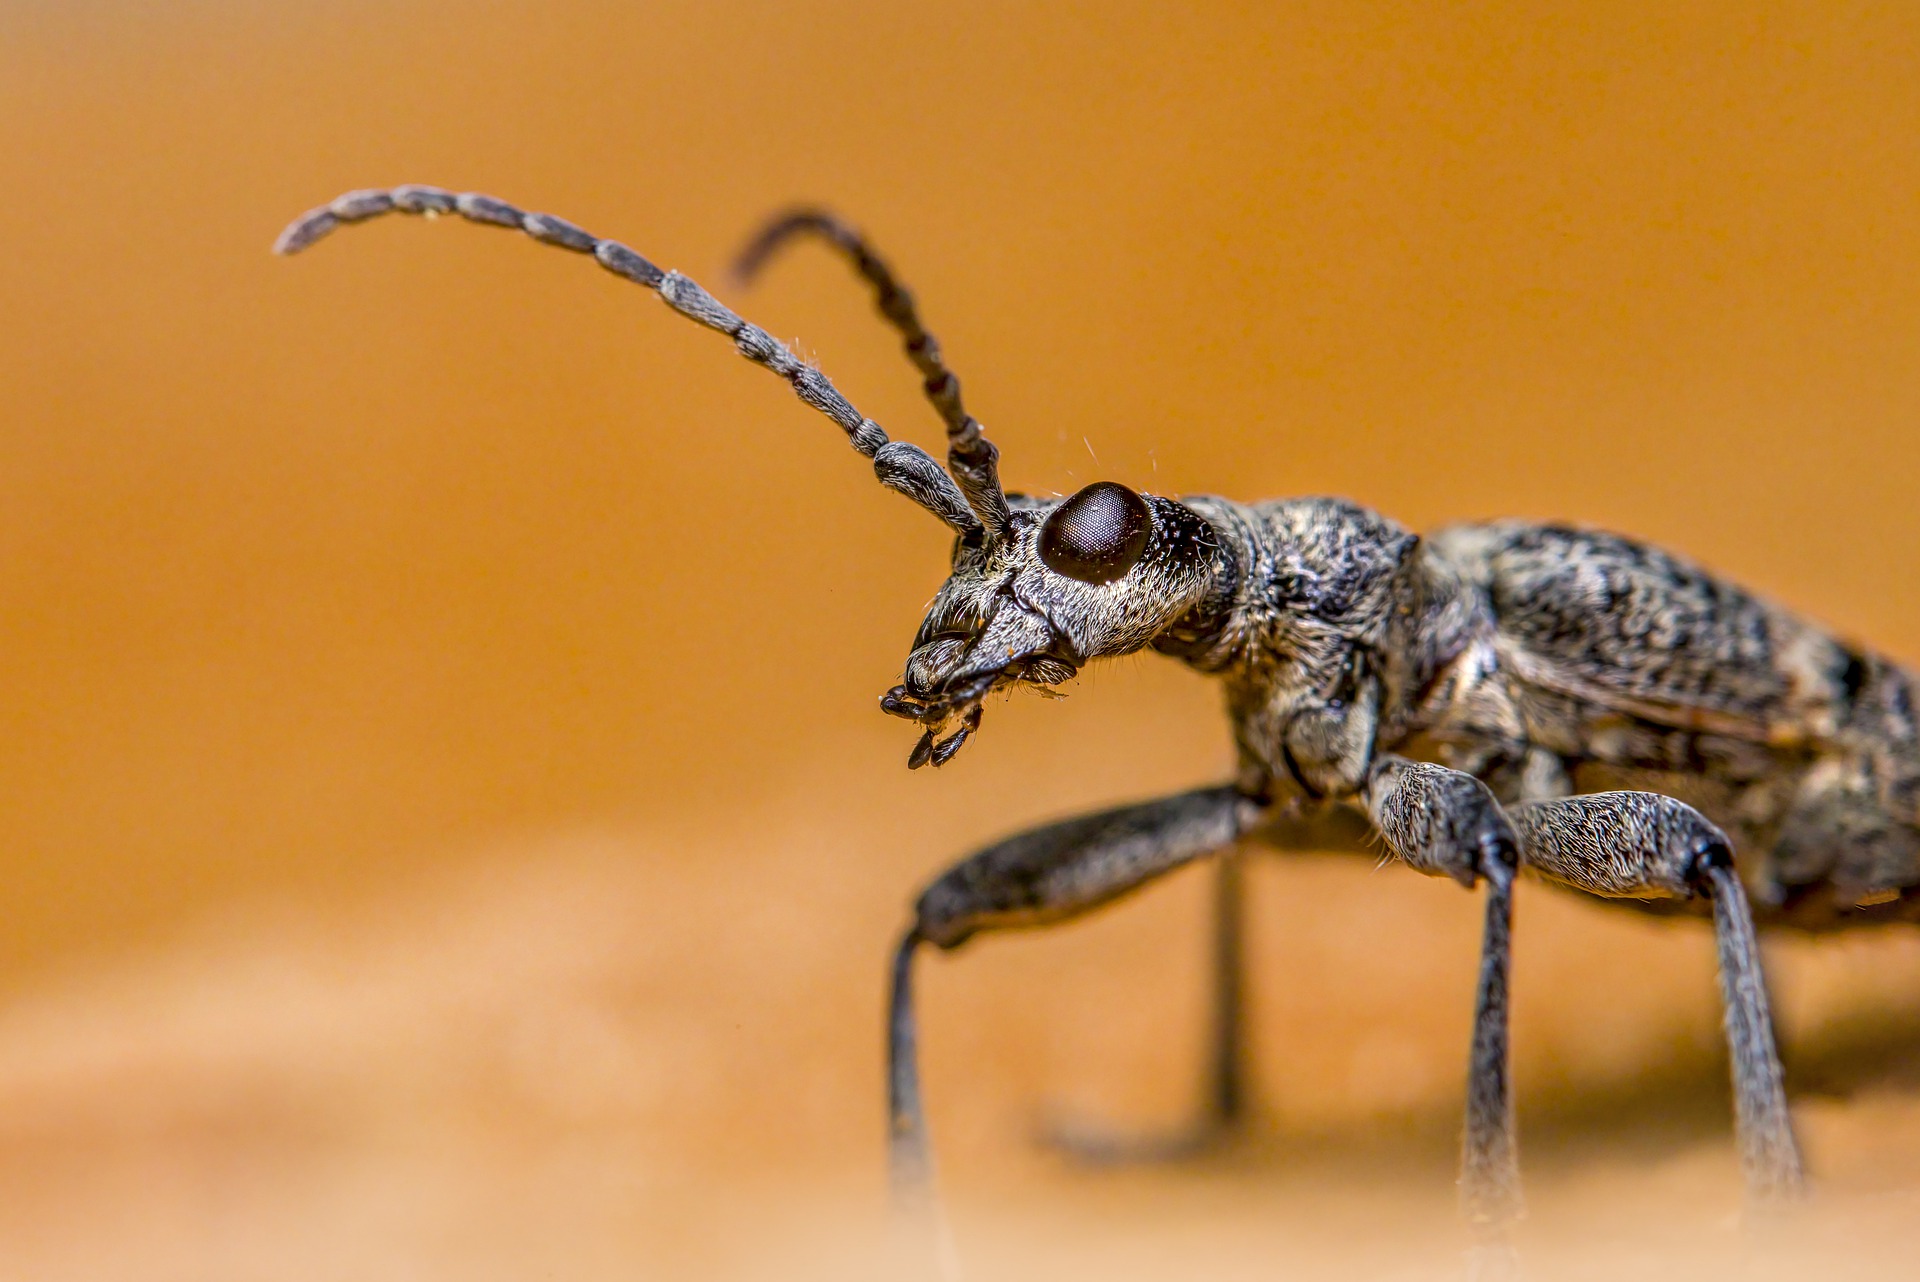 Black-spotted longhorn beetle (Rhagium mordax)